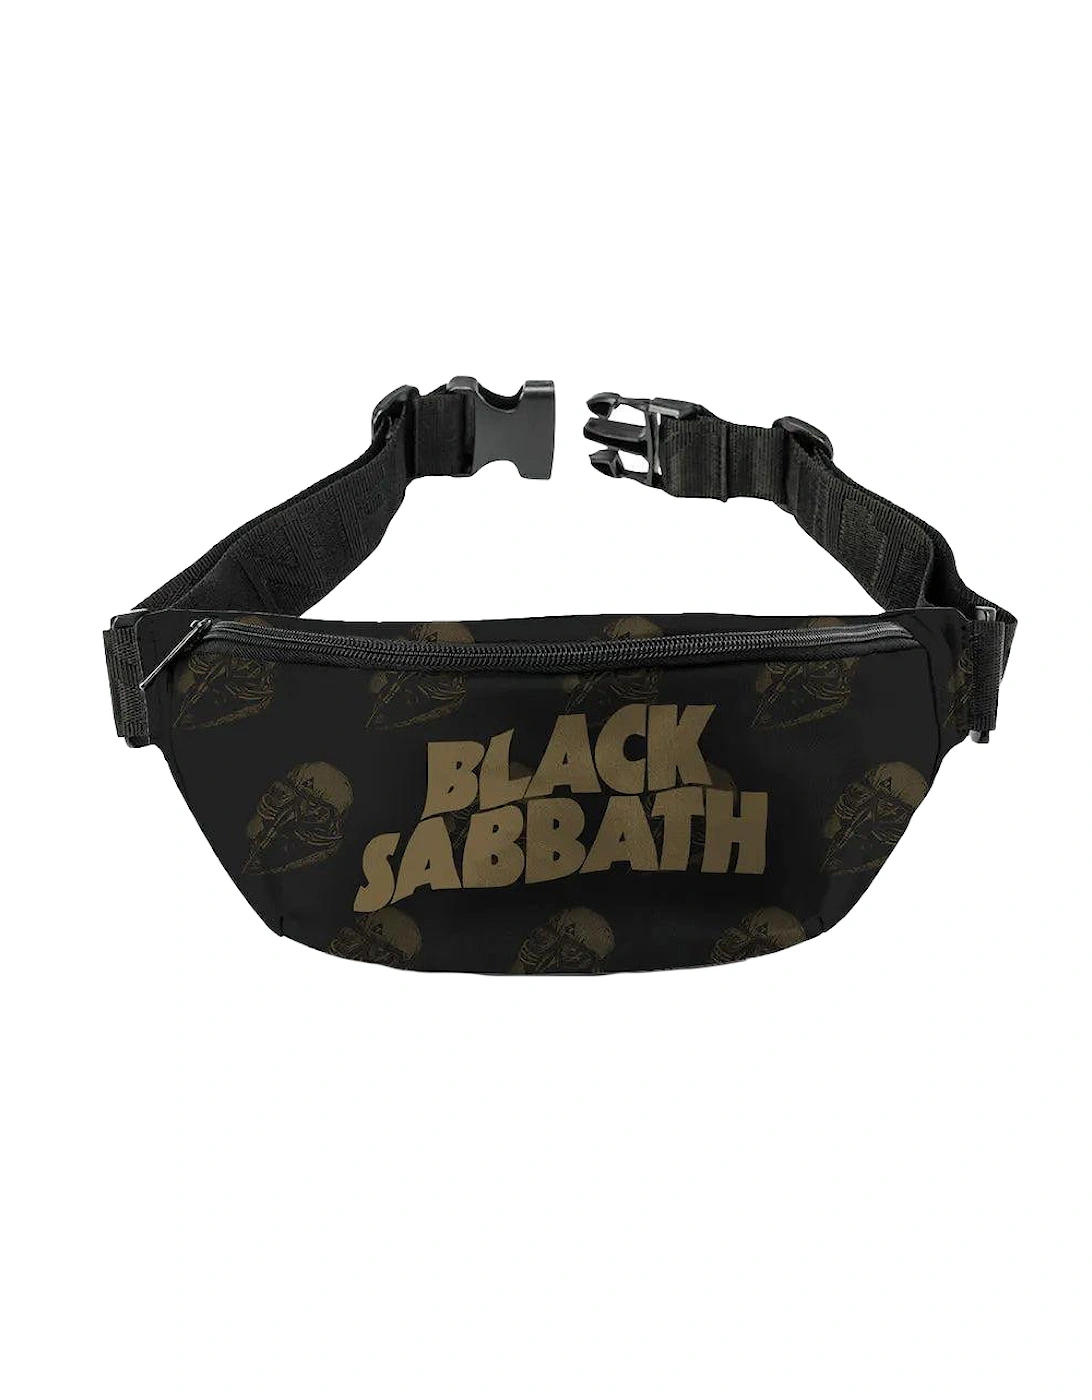 NSD Repeated Black Sabbath Bum Bag, 2 of 1